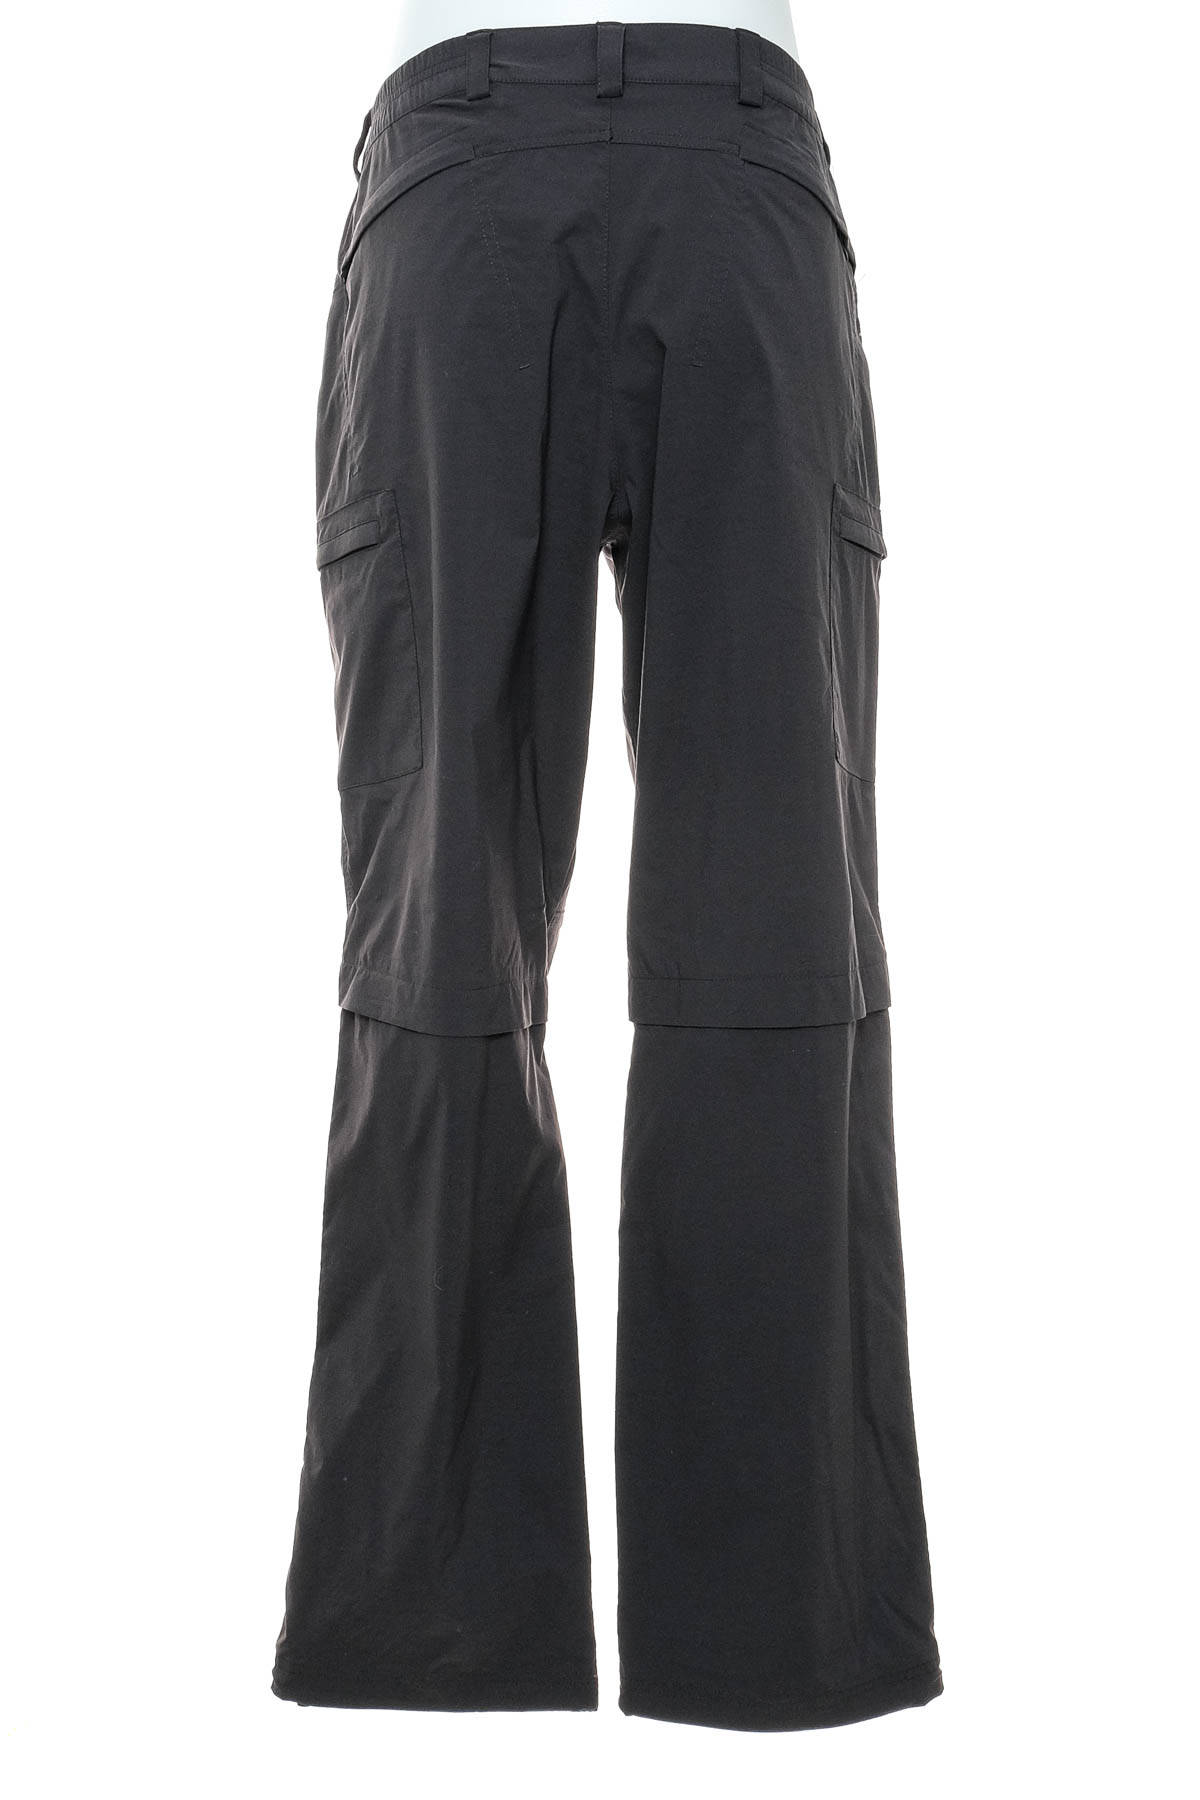 Men's trousers - Maul - 1